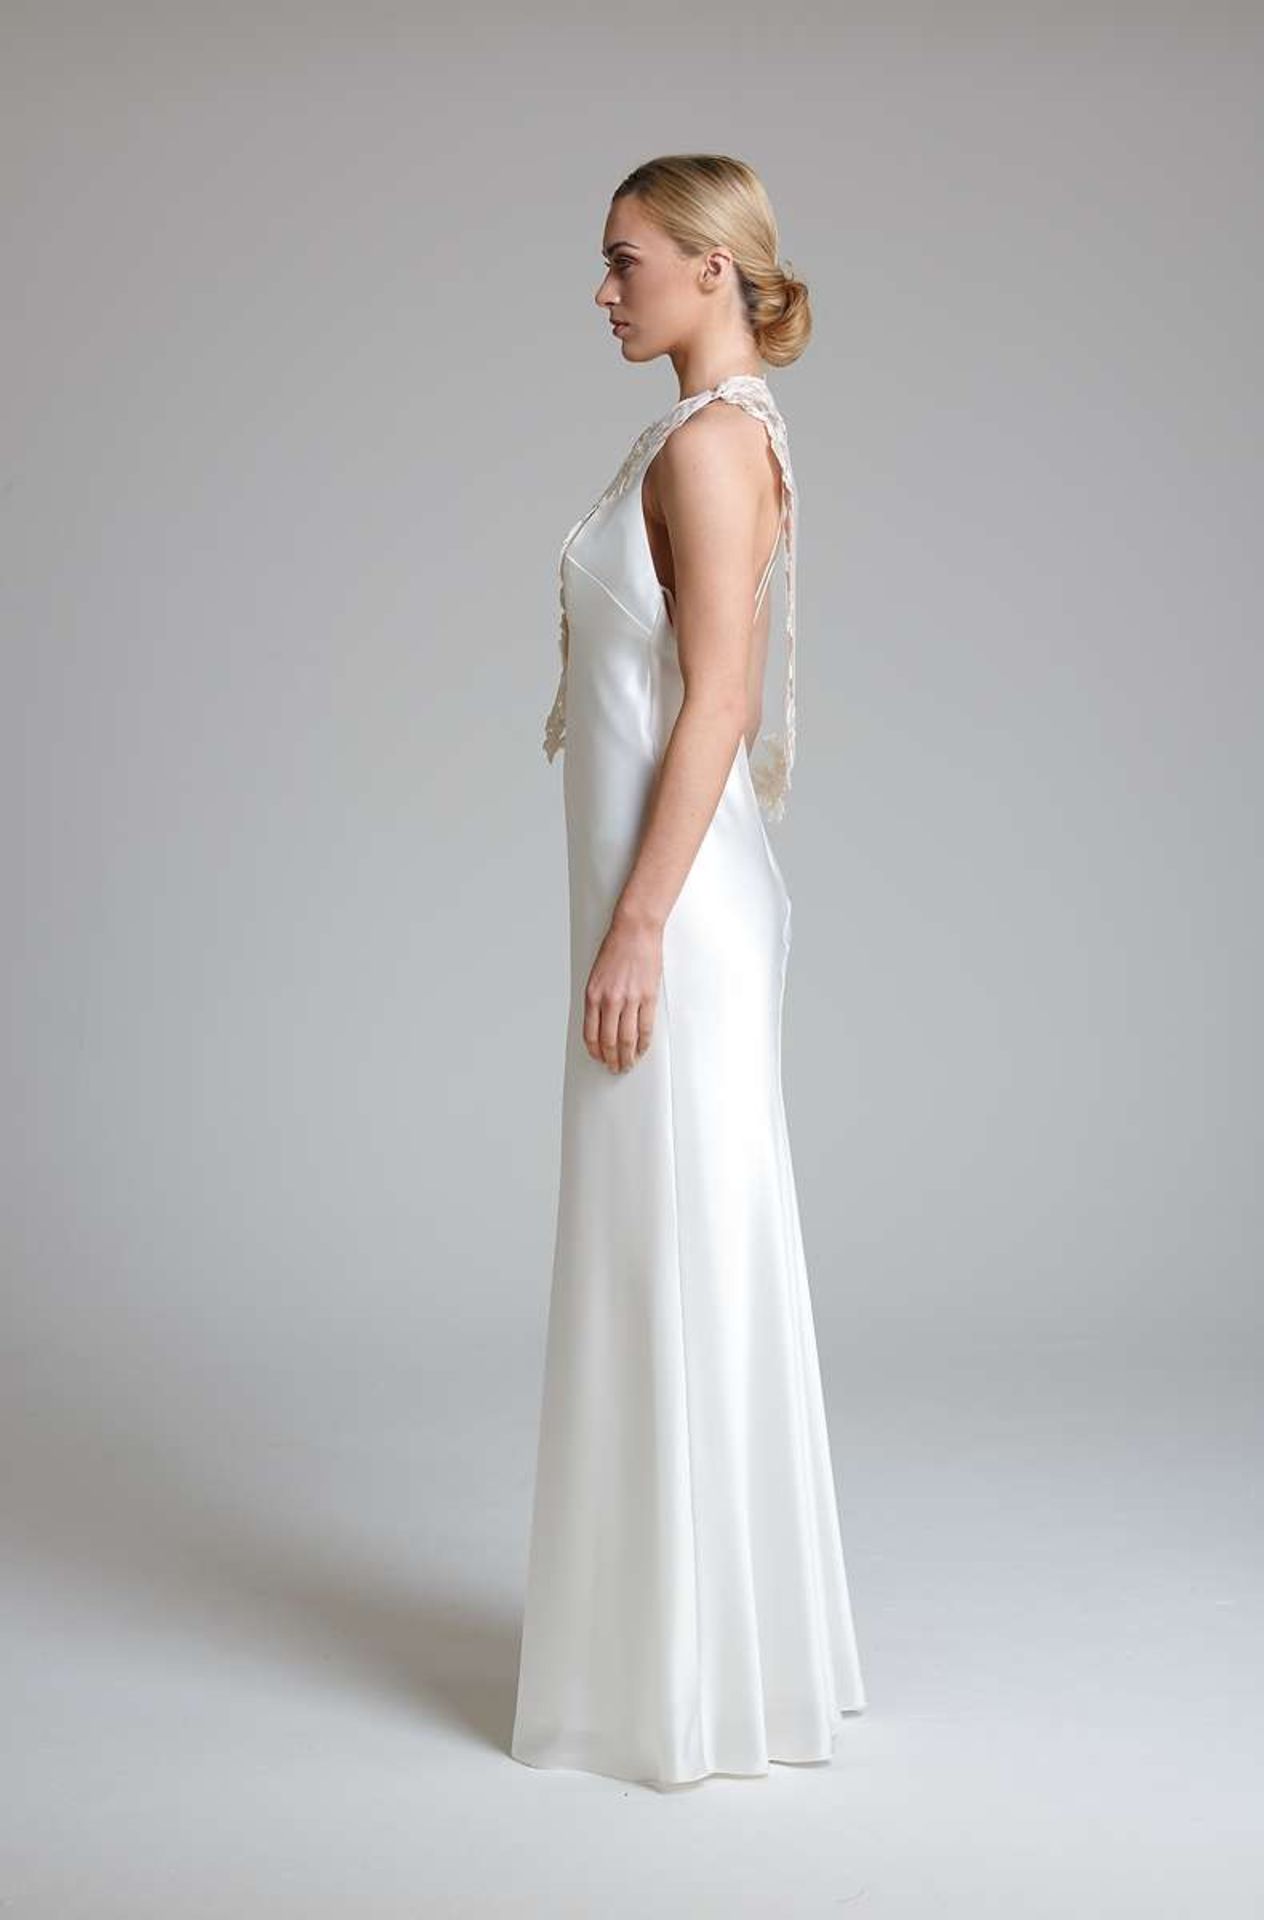 1 x DAVID FIELDEN '8813' Elegant High Neck Biased Cut Designer Wedding Dress RRP £2,440 UK14 - Image 2 of 11